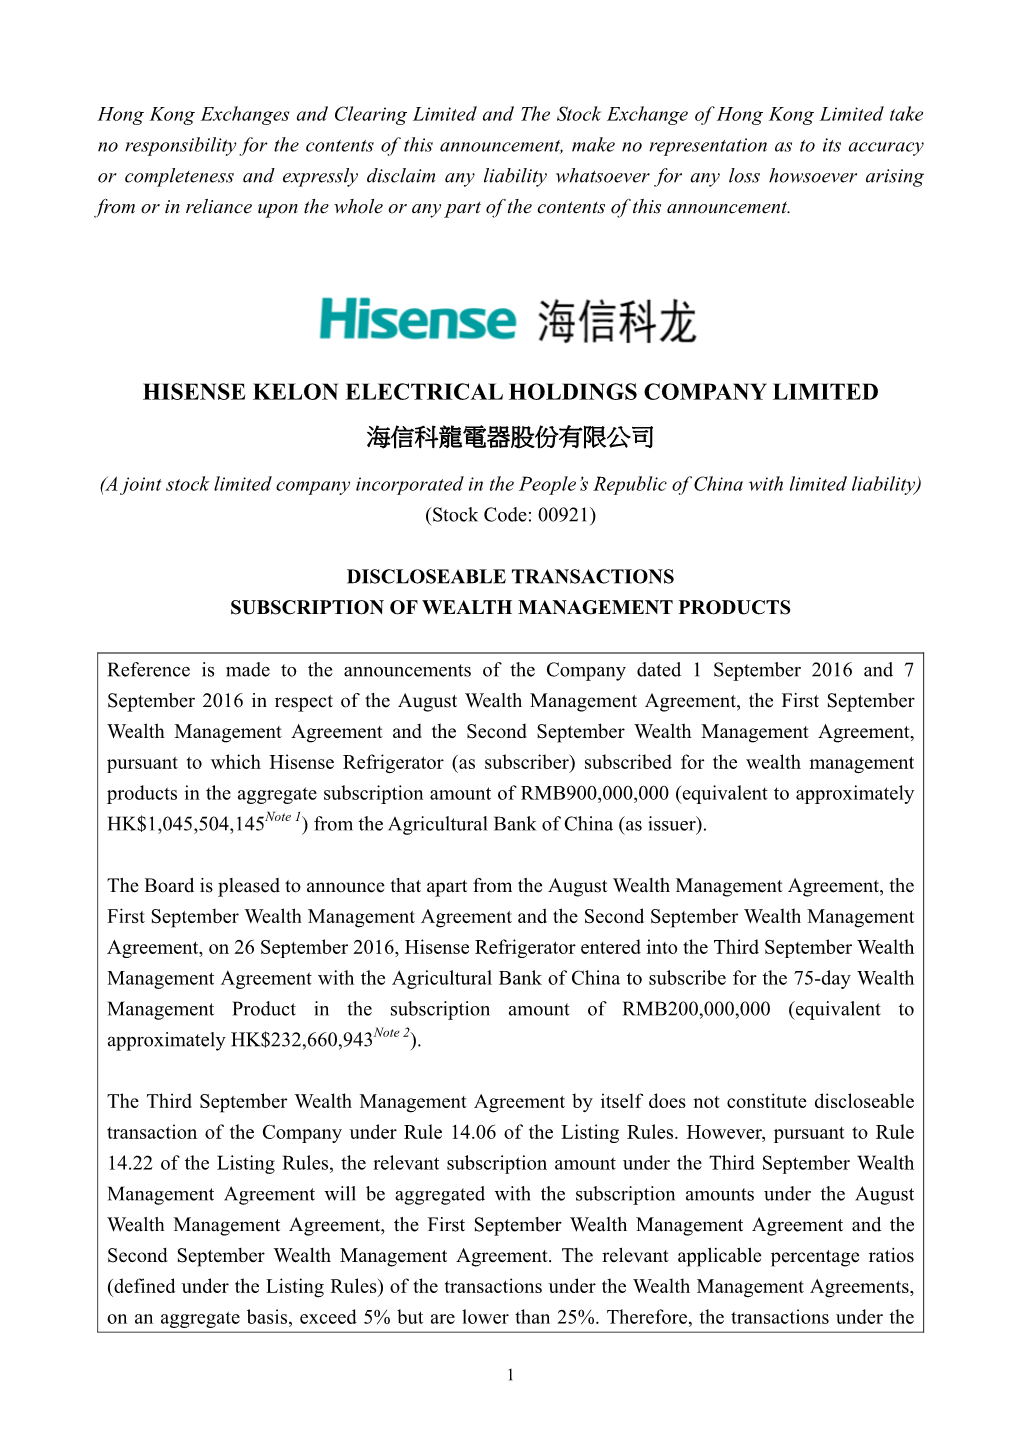 Hisense Kelon Electrical Holdings Company Limited 海信科龍電器股份有限公司